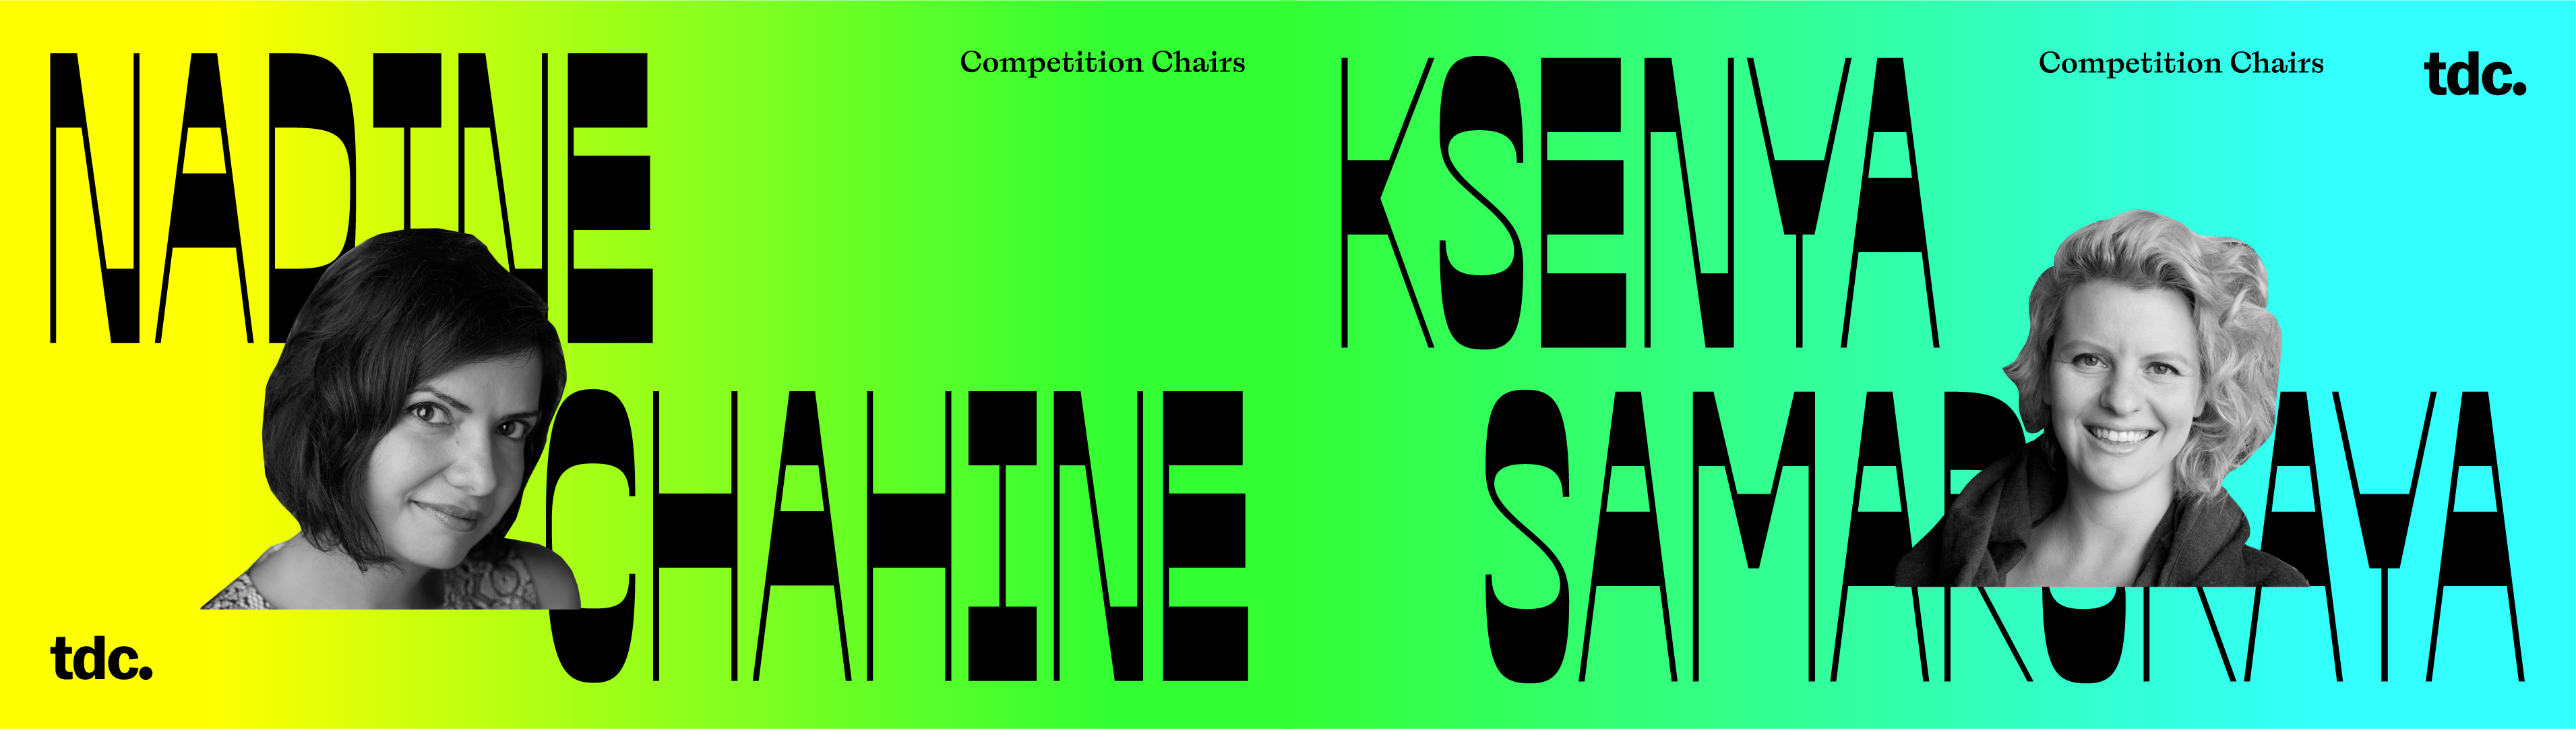 Nadine Chahine and Ksenya Samarskaya, TDC’s 25th Typeface Design Competition chairs. Competition branding by Tereza Bettinardi.